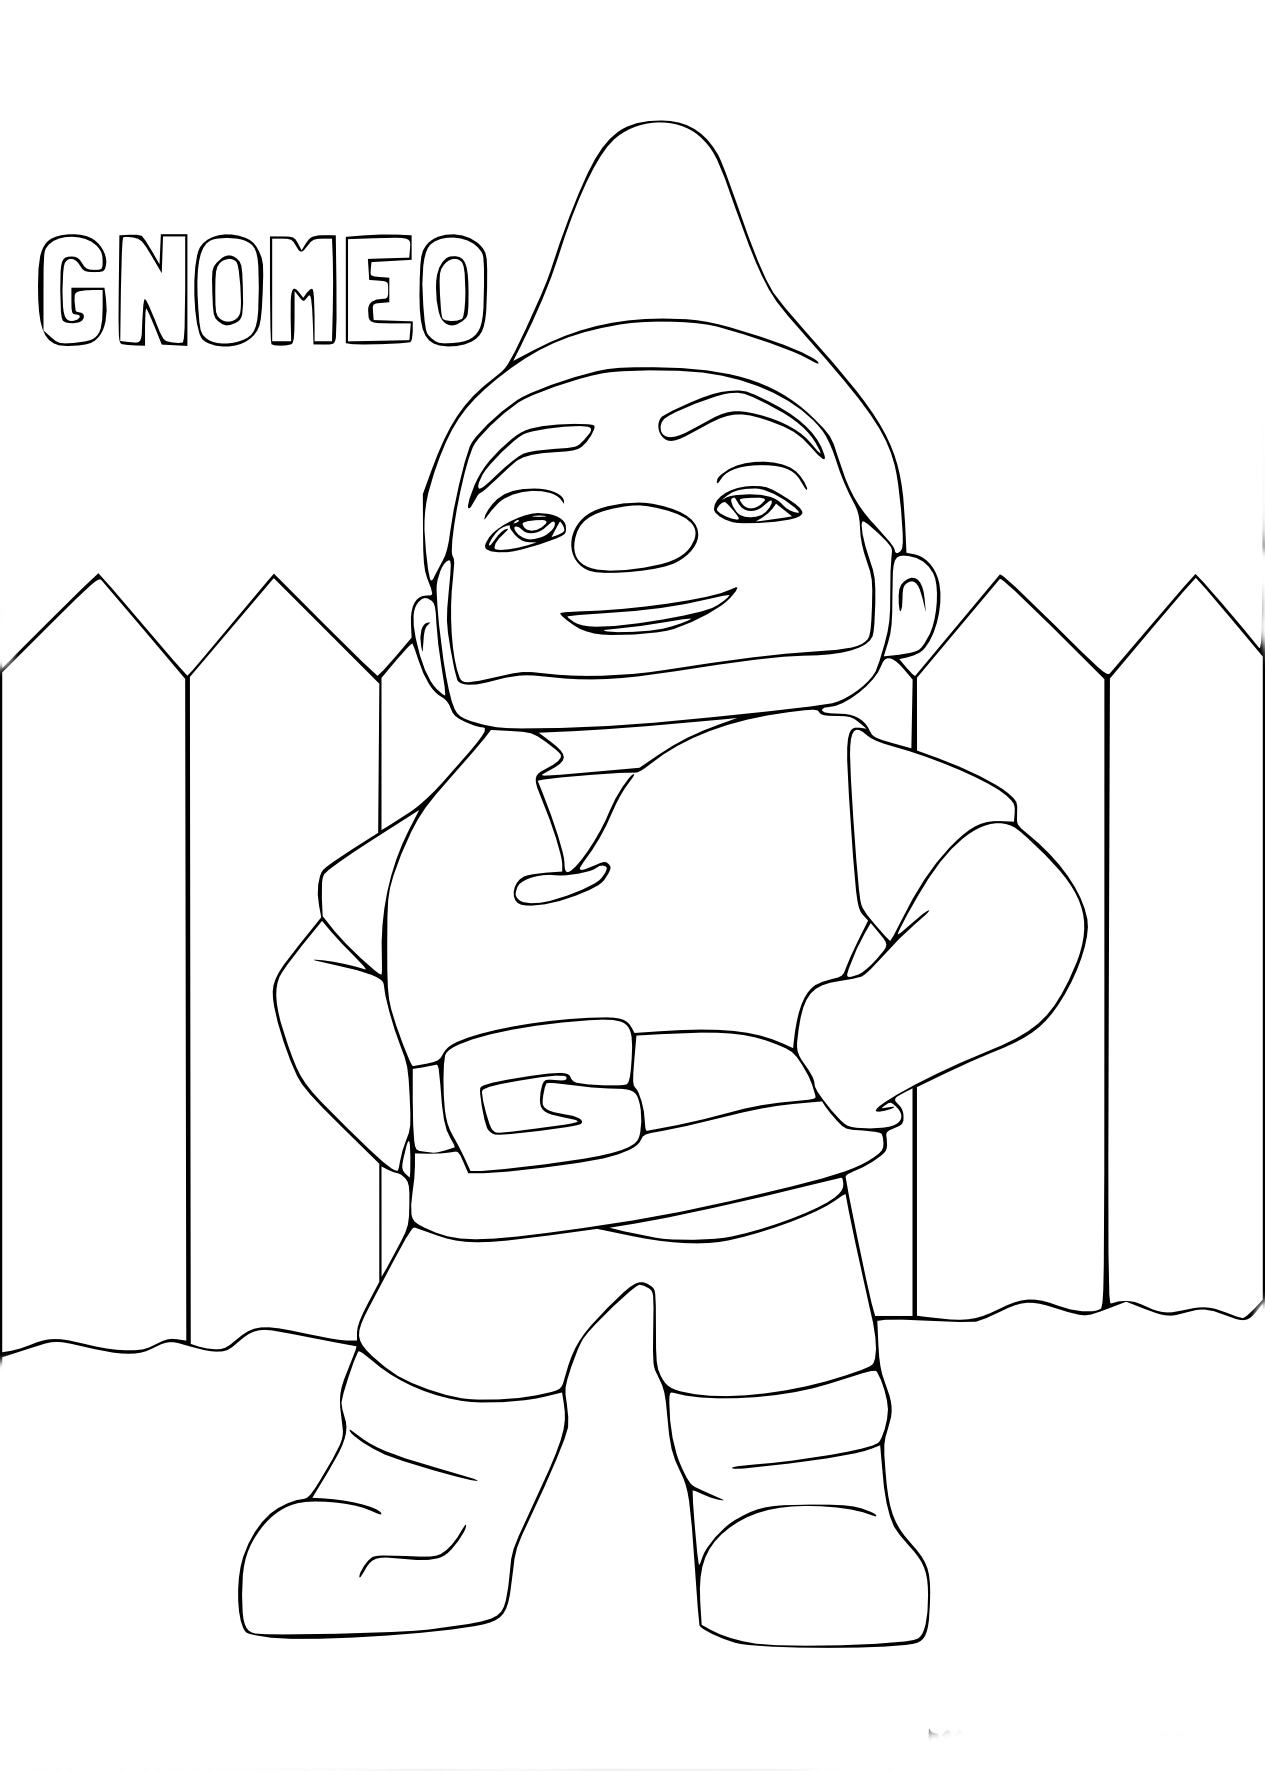 Gnomeo coloring page